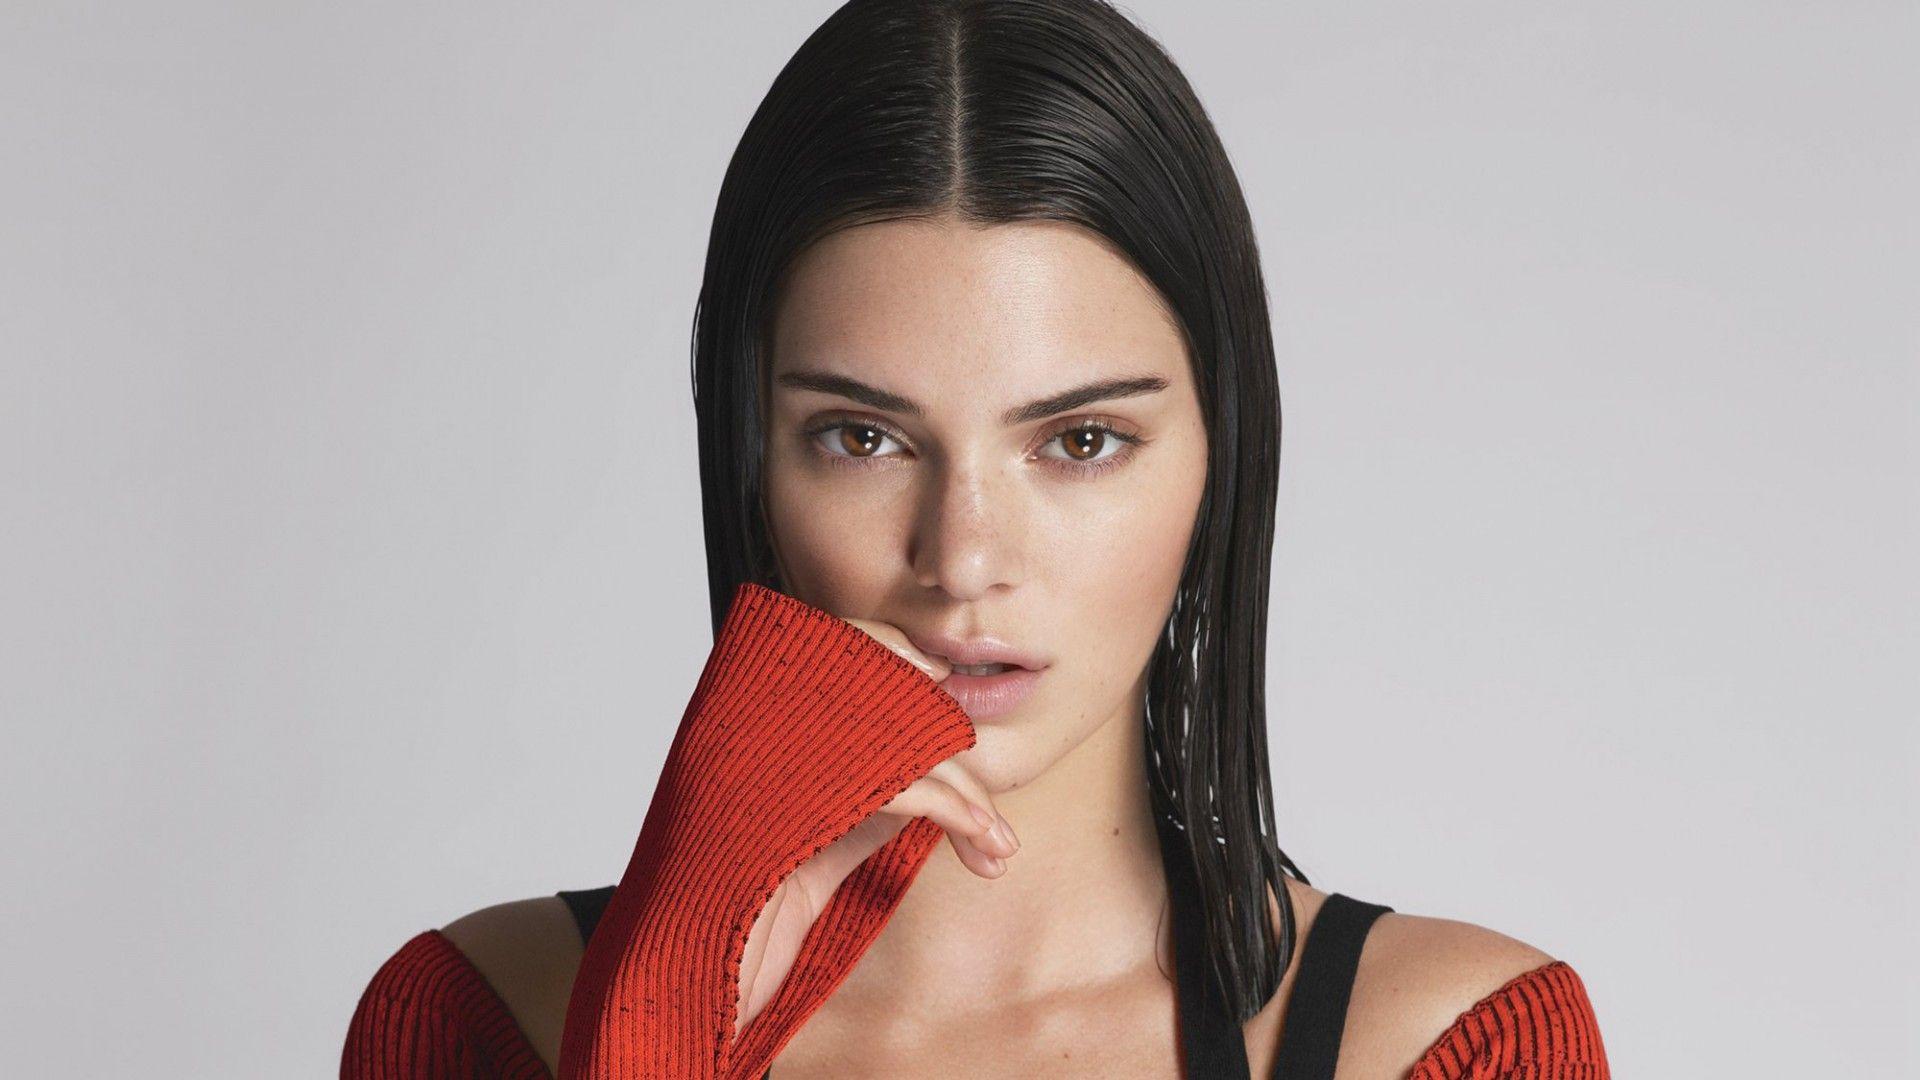 Kendall Jenner 2017 Portrait Wallpapers